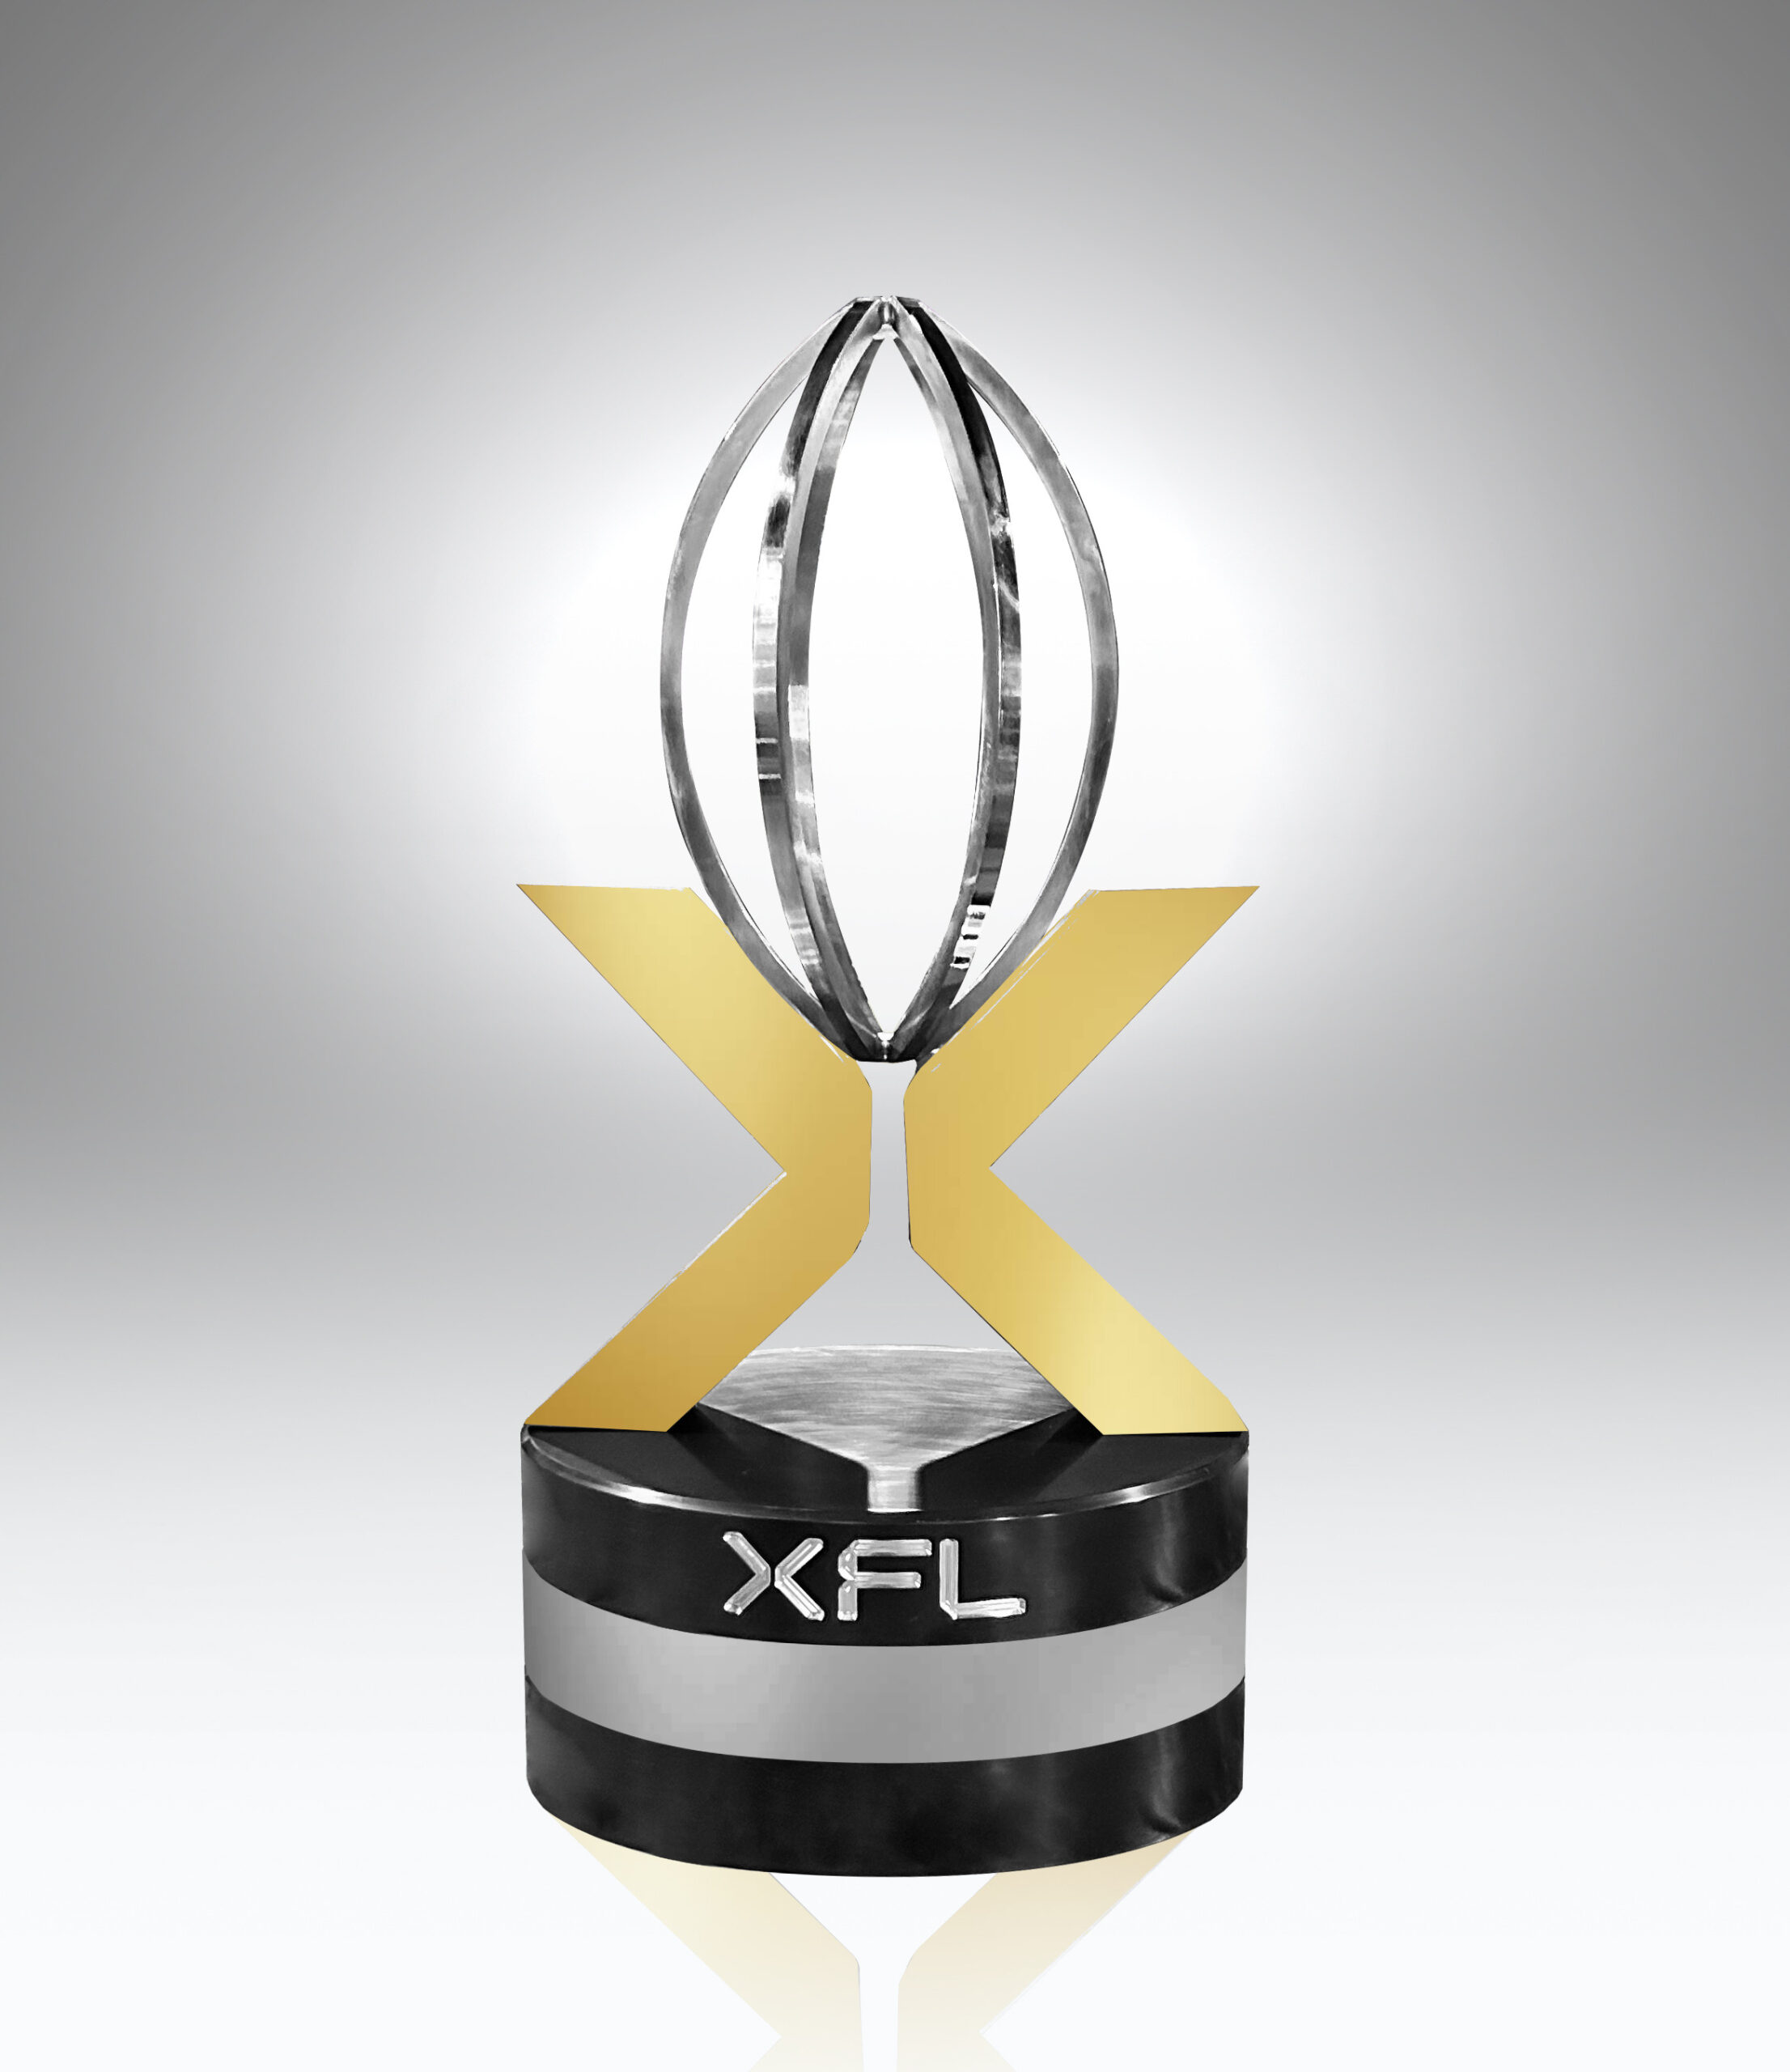 XFL Unveils Championship Trophy, Where Is XFL Championship Game